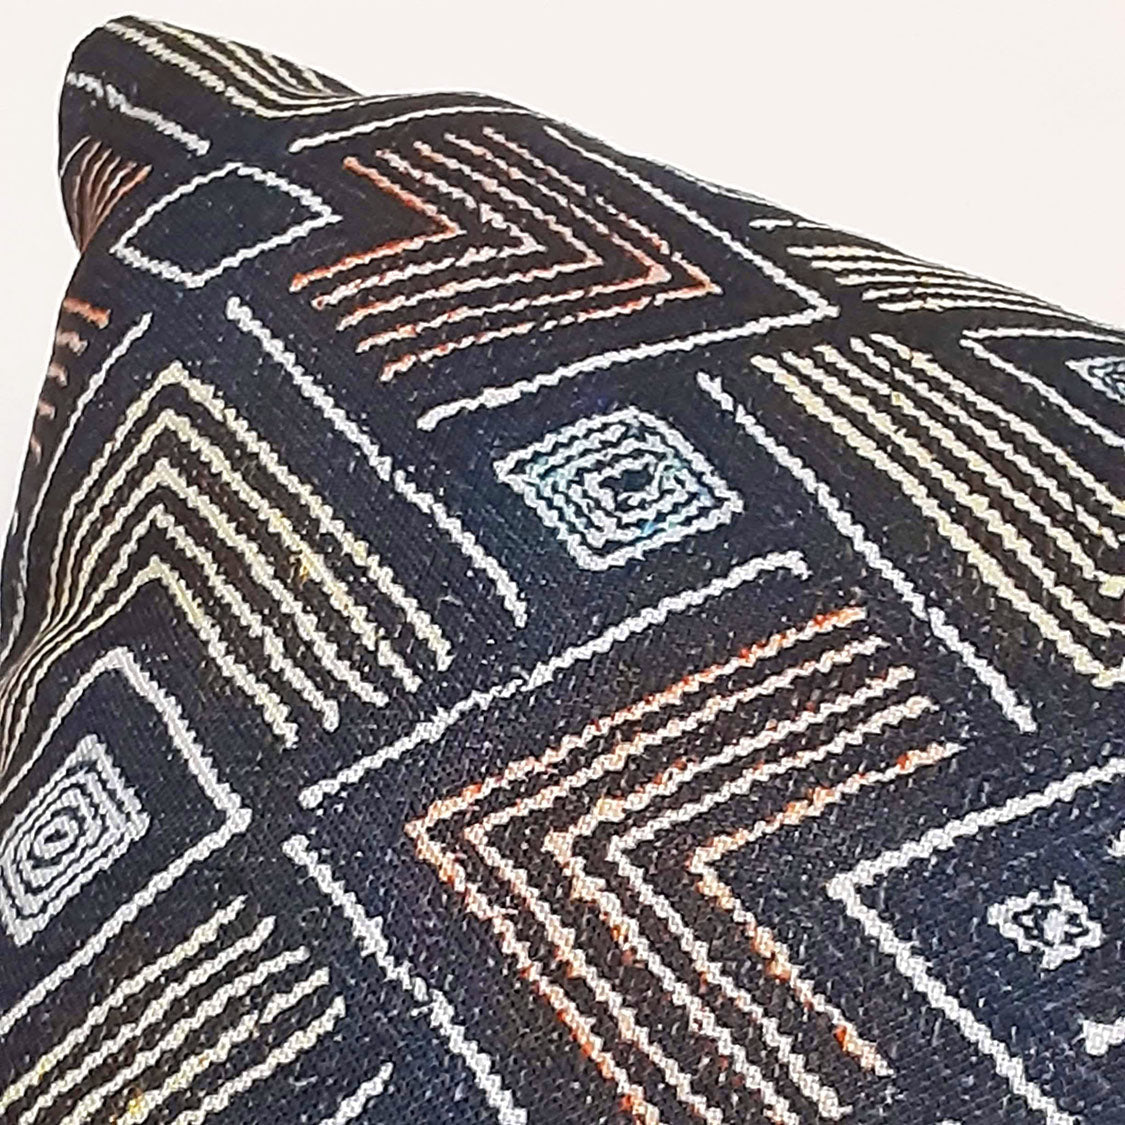 AnitaveeTextile Modern African Pillows in Tribal Print - 3 Sizes